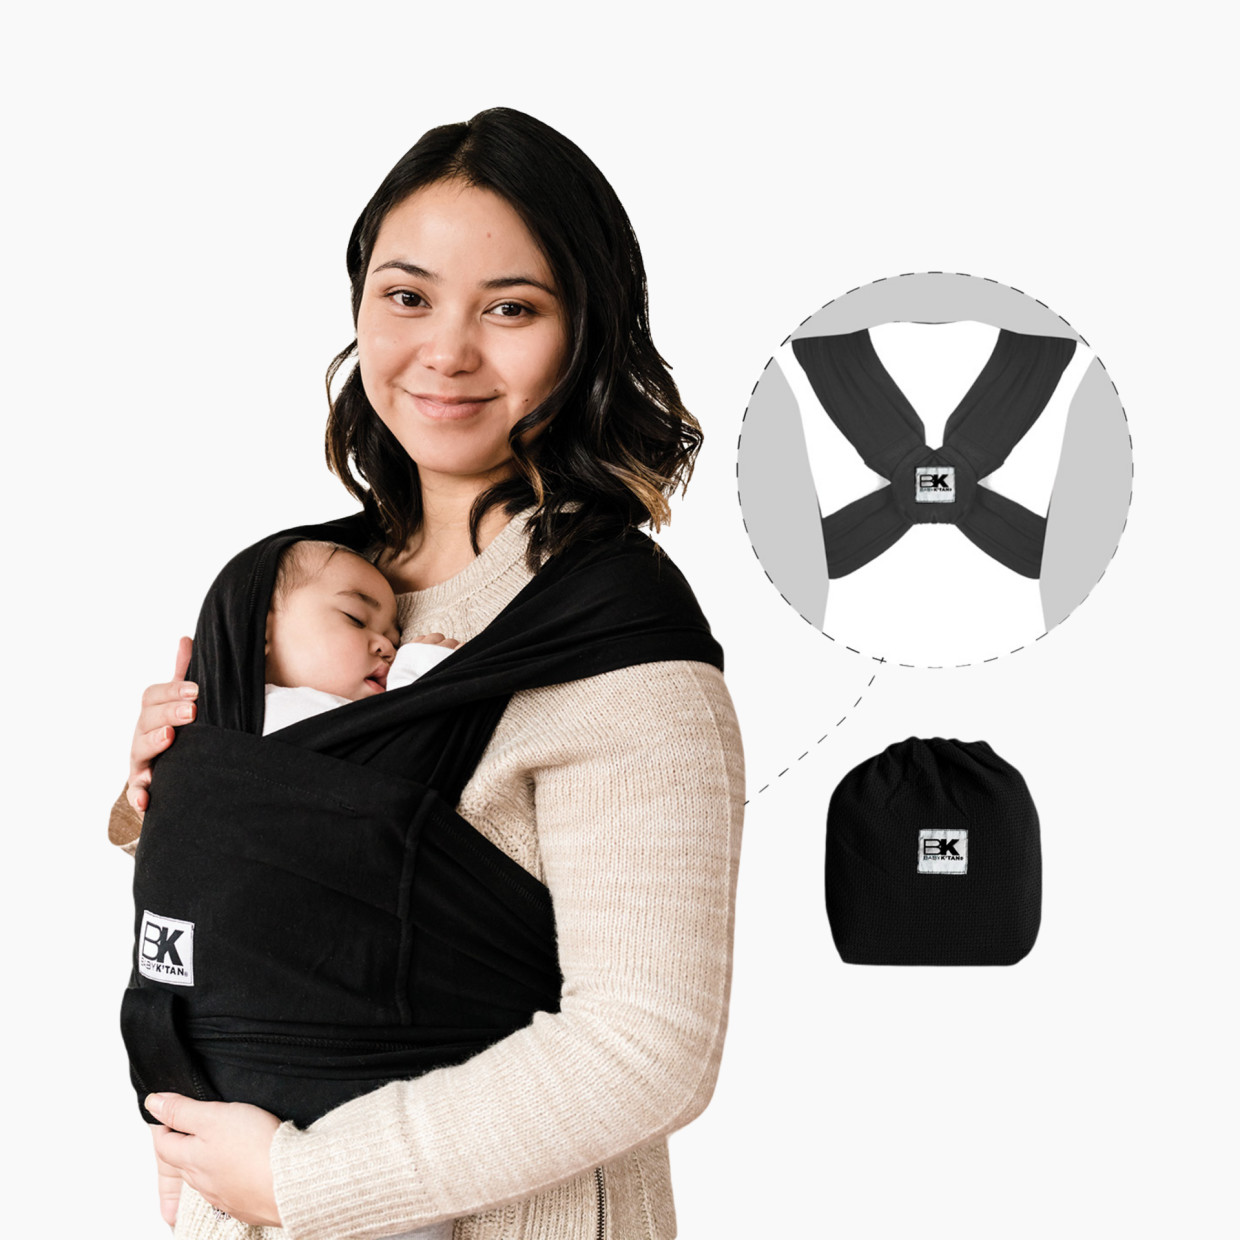 Baby K'tan Original Baby Wrap Carrier - Black, X-Small.